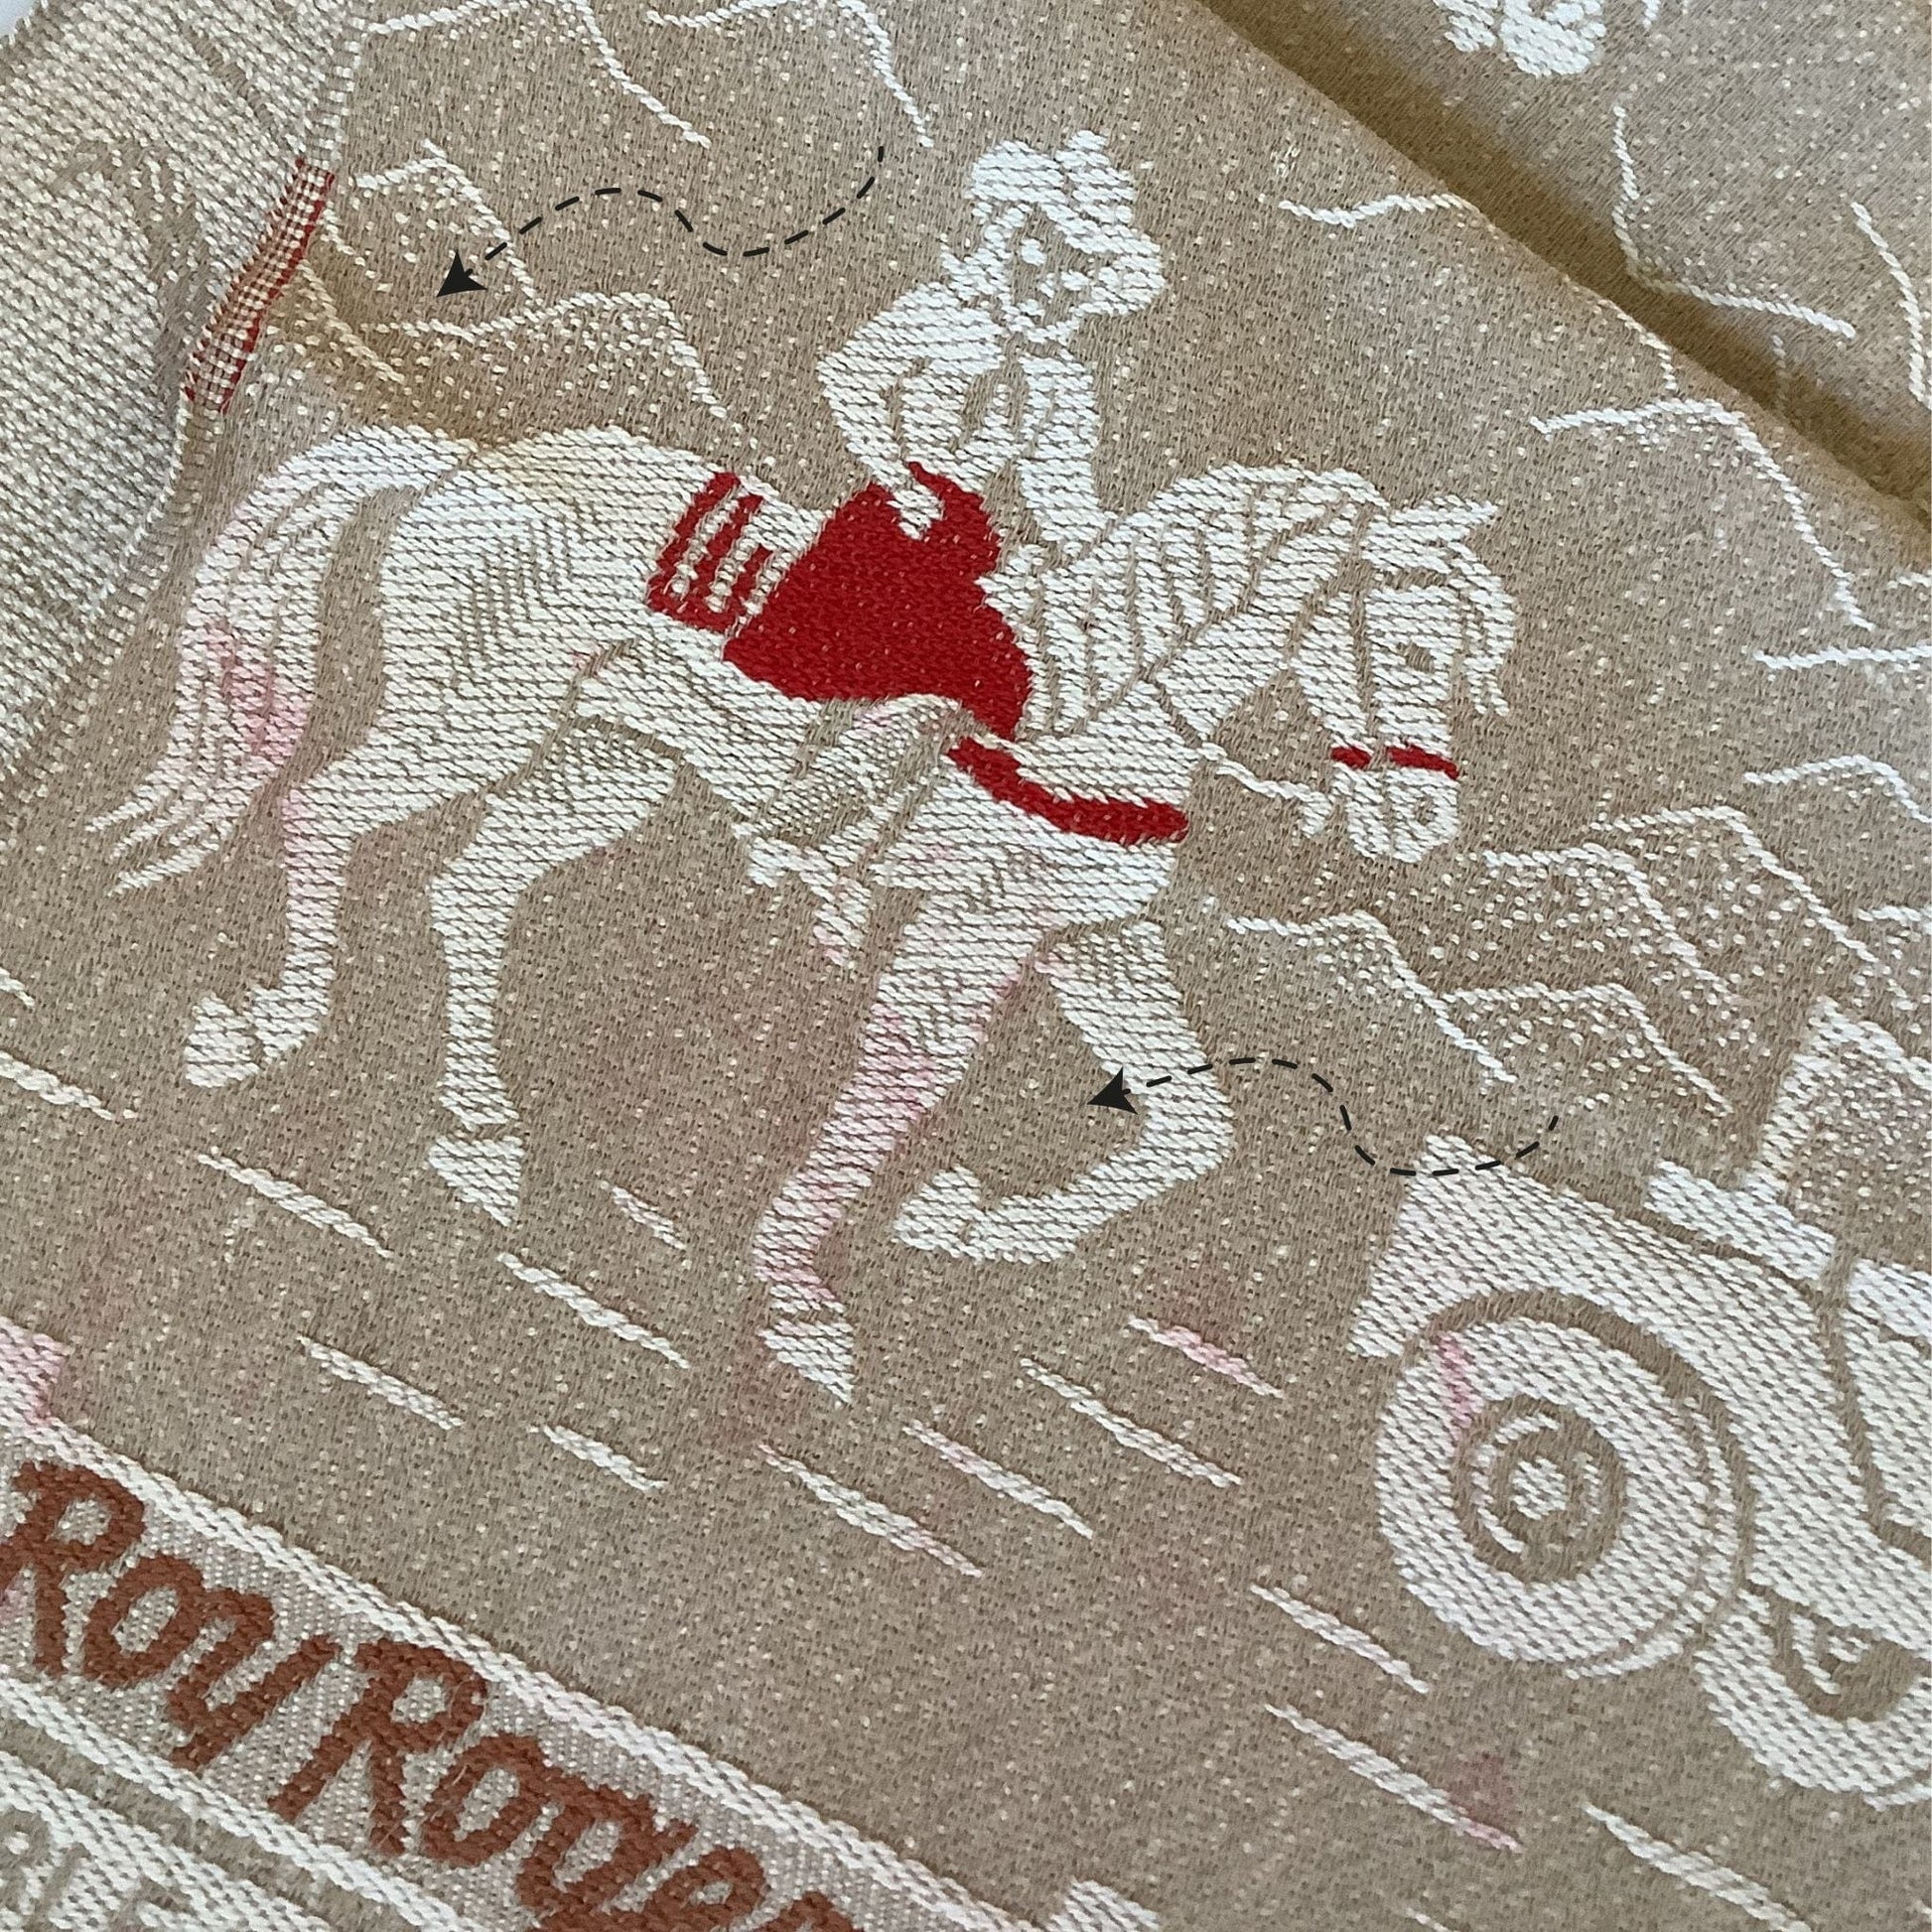 Roy Rogers 1950s Bedspread Multi / Cotton / Vintage 1950s